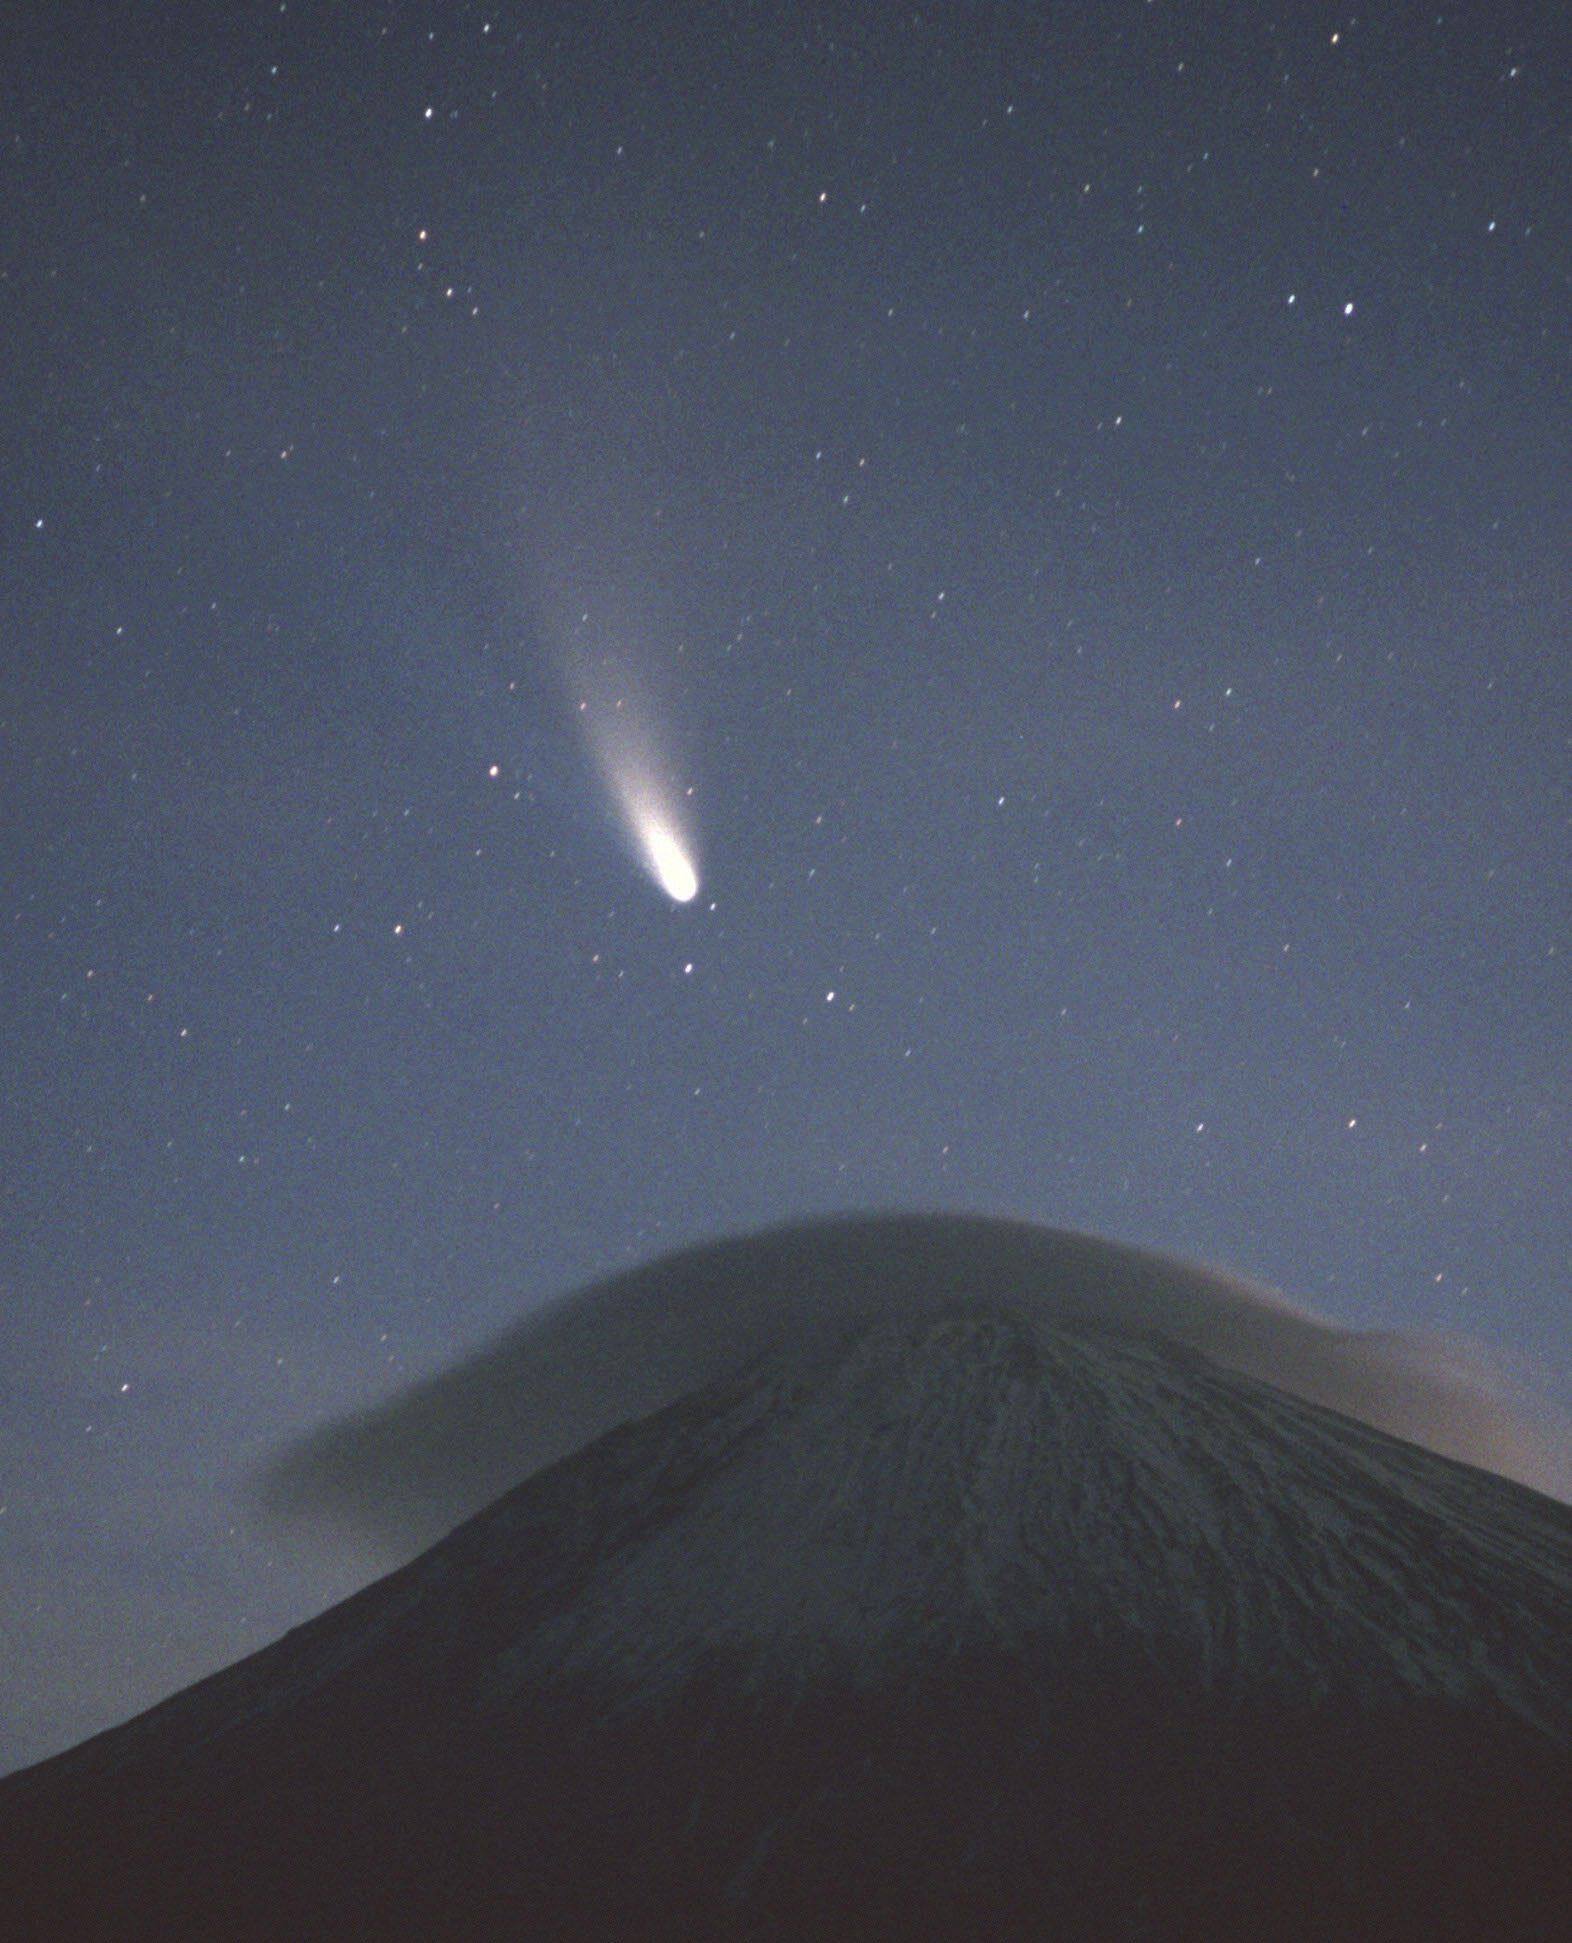 1997 war der Komet Hale-Bopp 18 Monate lang mit dem bloßen Auge sichtbar, hier über dem japanischen Berg Fuji.